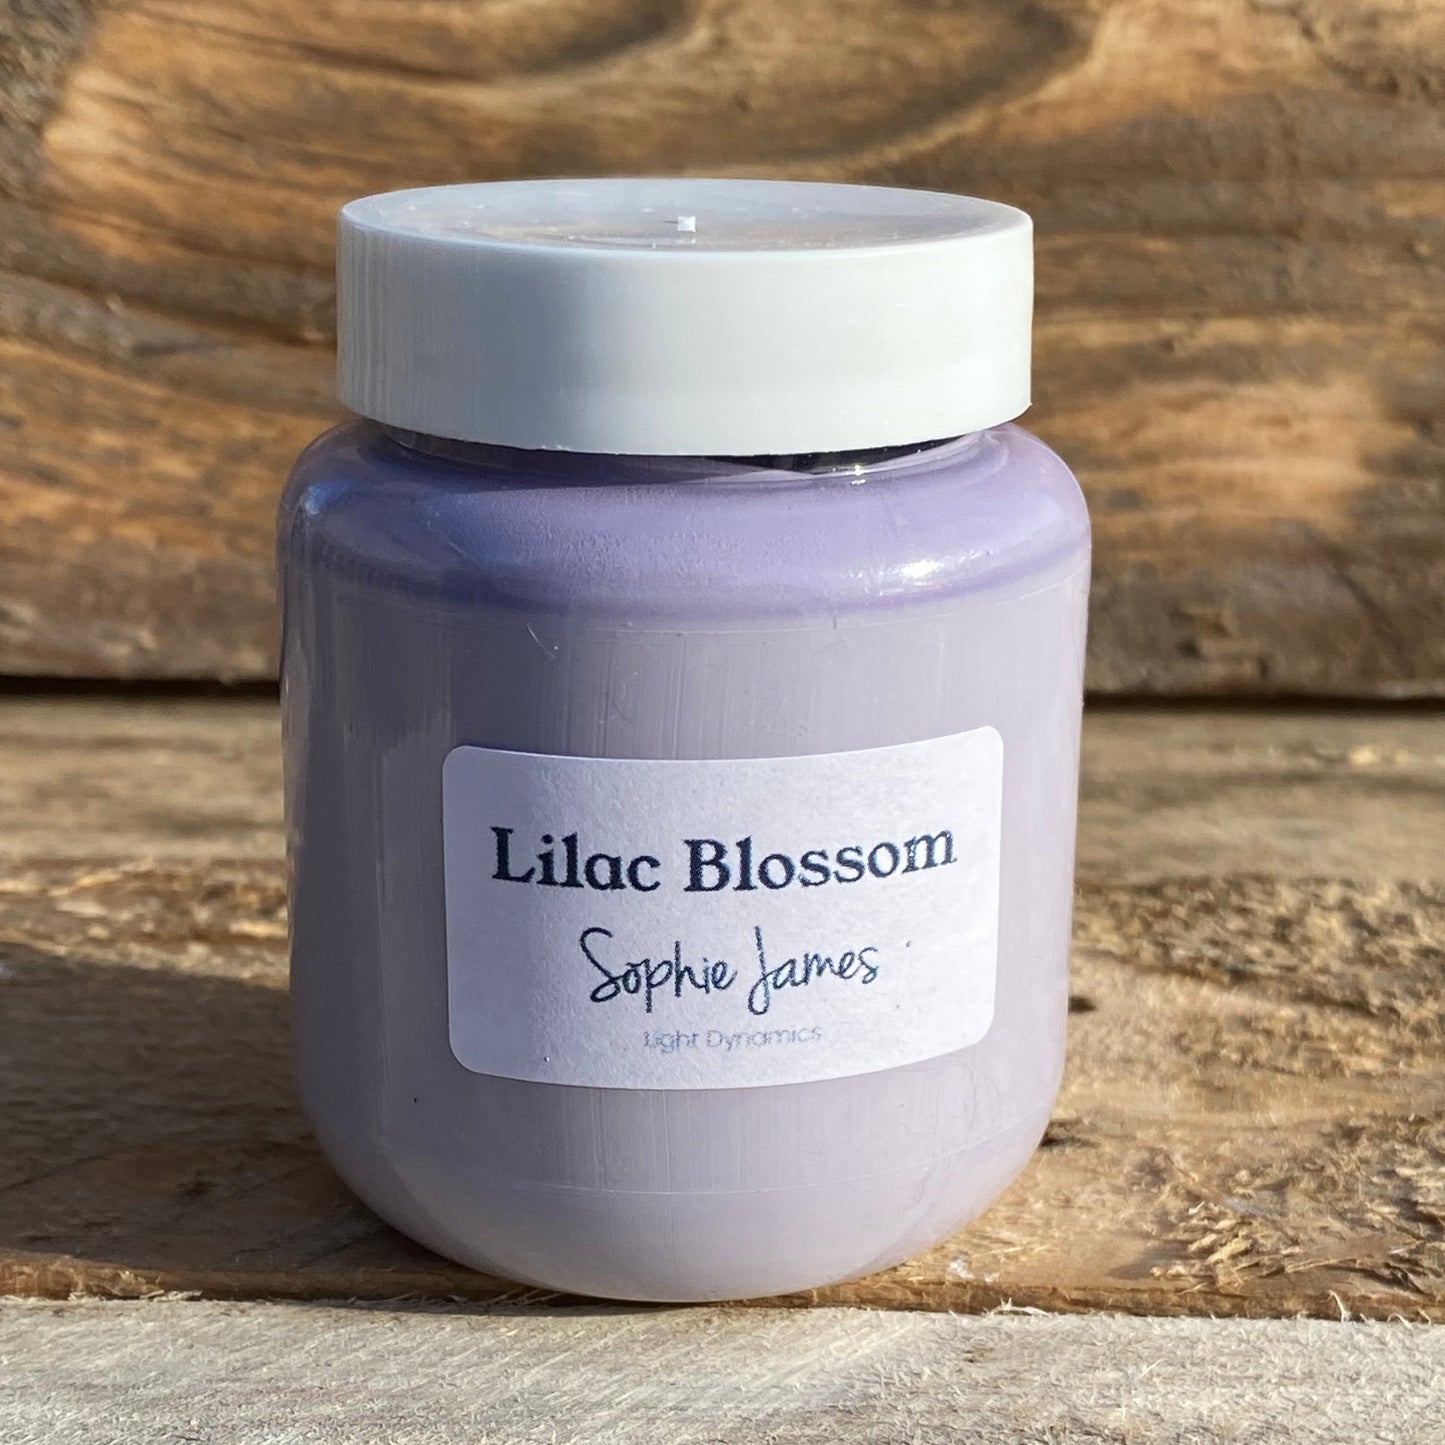 Lilac Blossom Light Dynamics